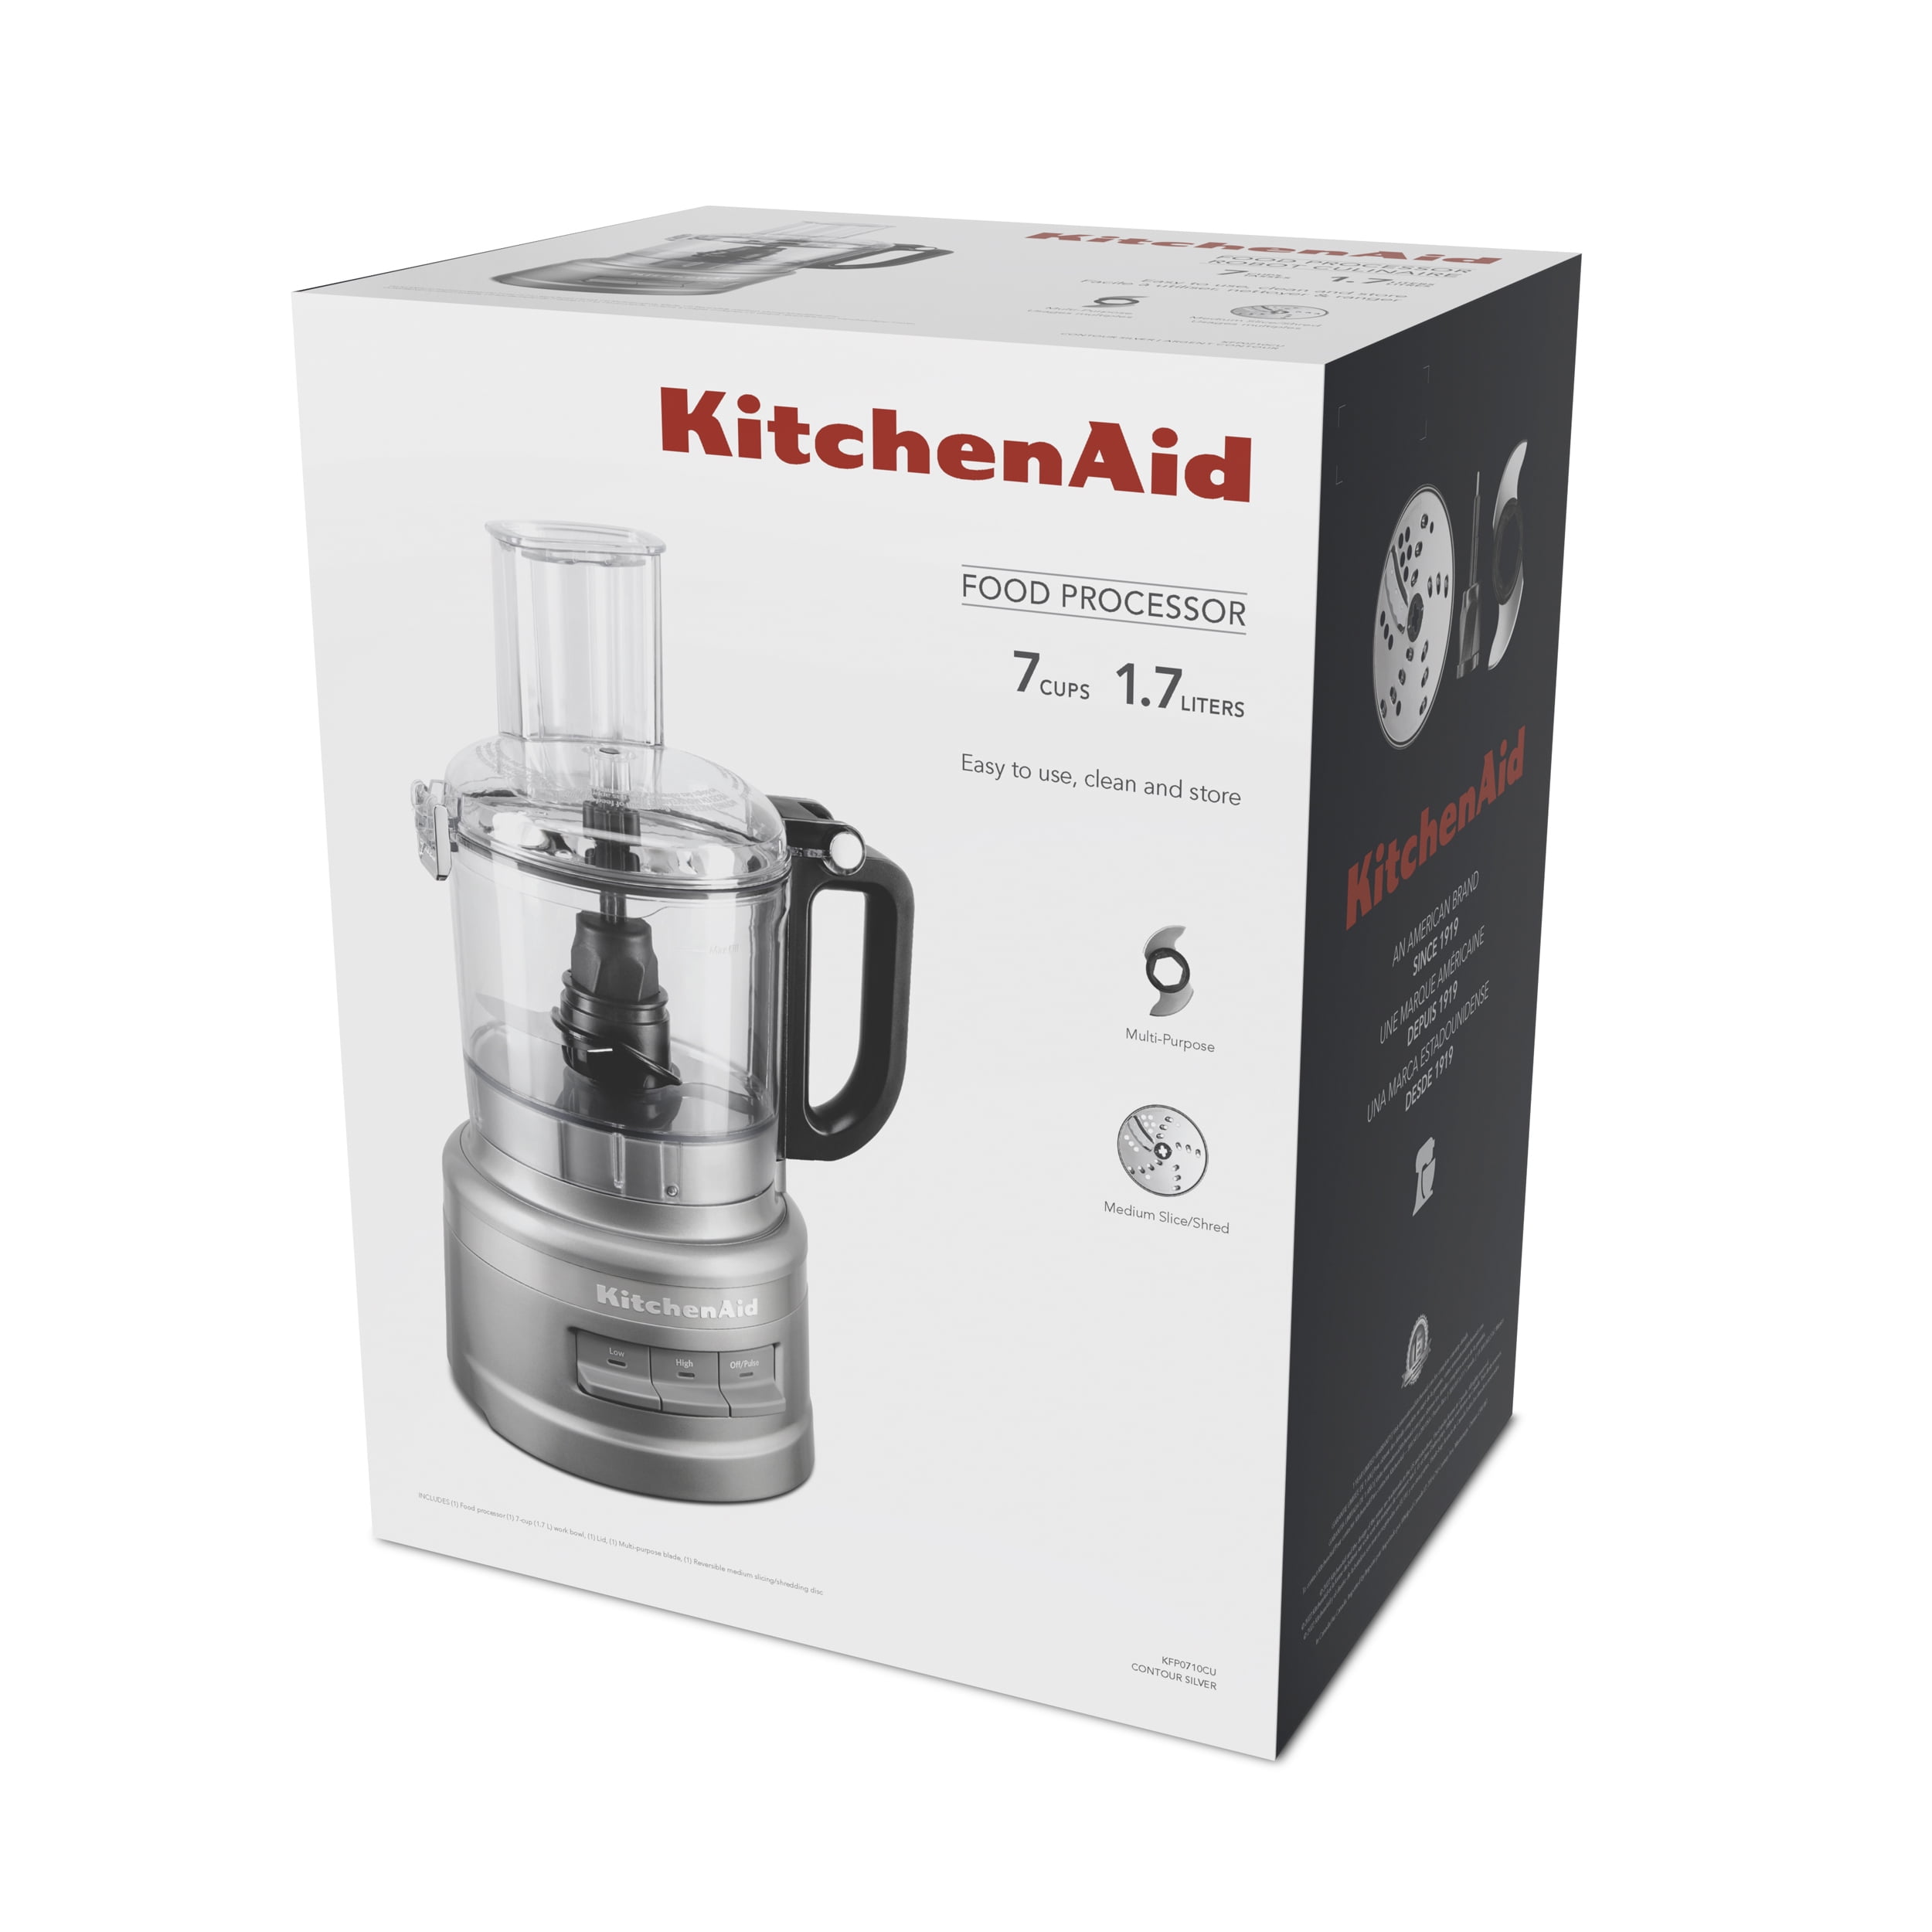 KitchenAid 7 Cups 320-Watt Contour Silver Food Processor at